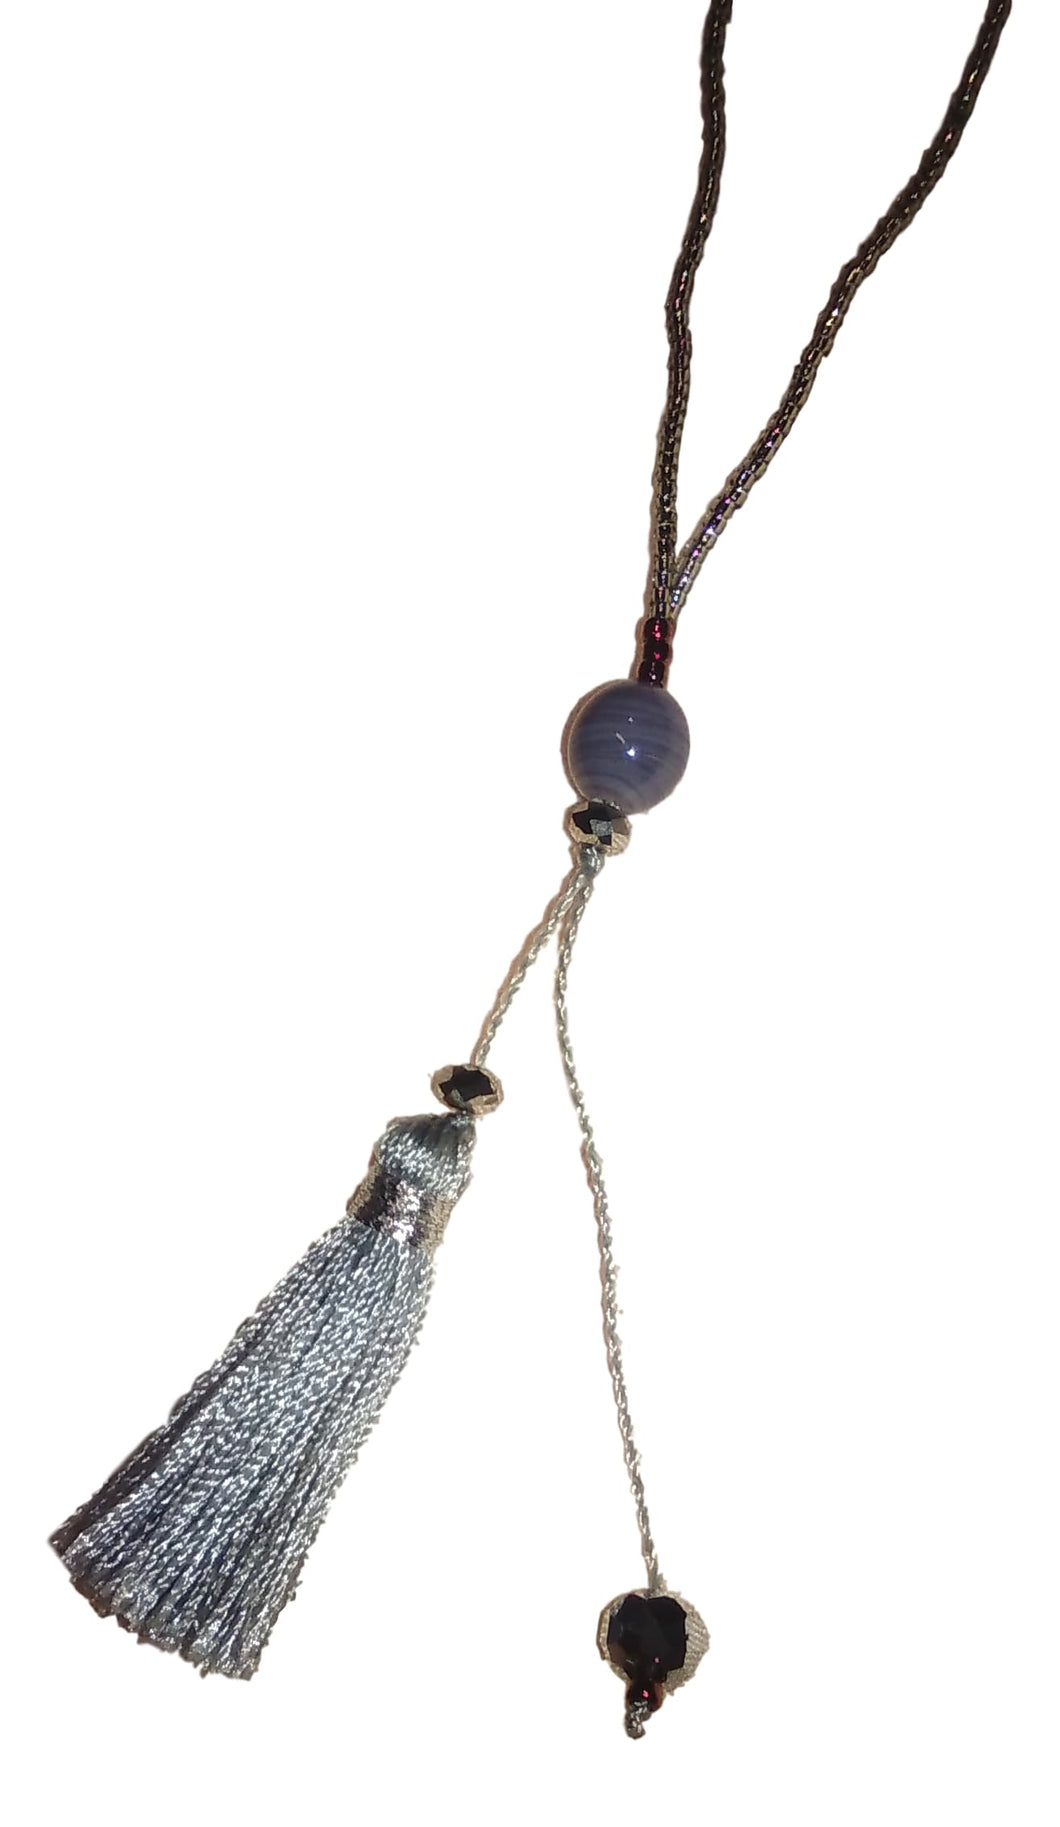 Jewelry - Mala Necklace with Buddha and small beads - Grey